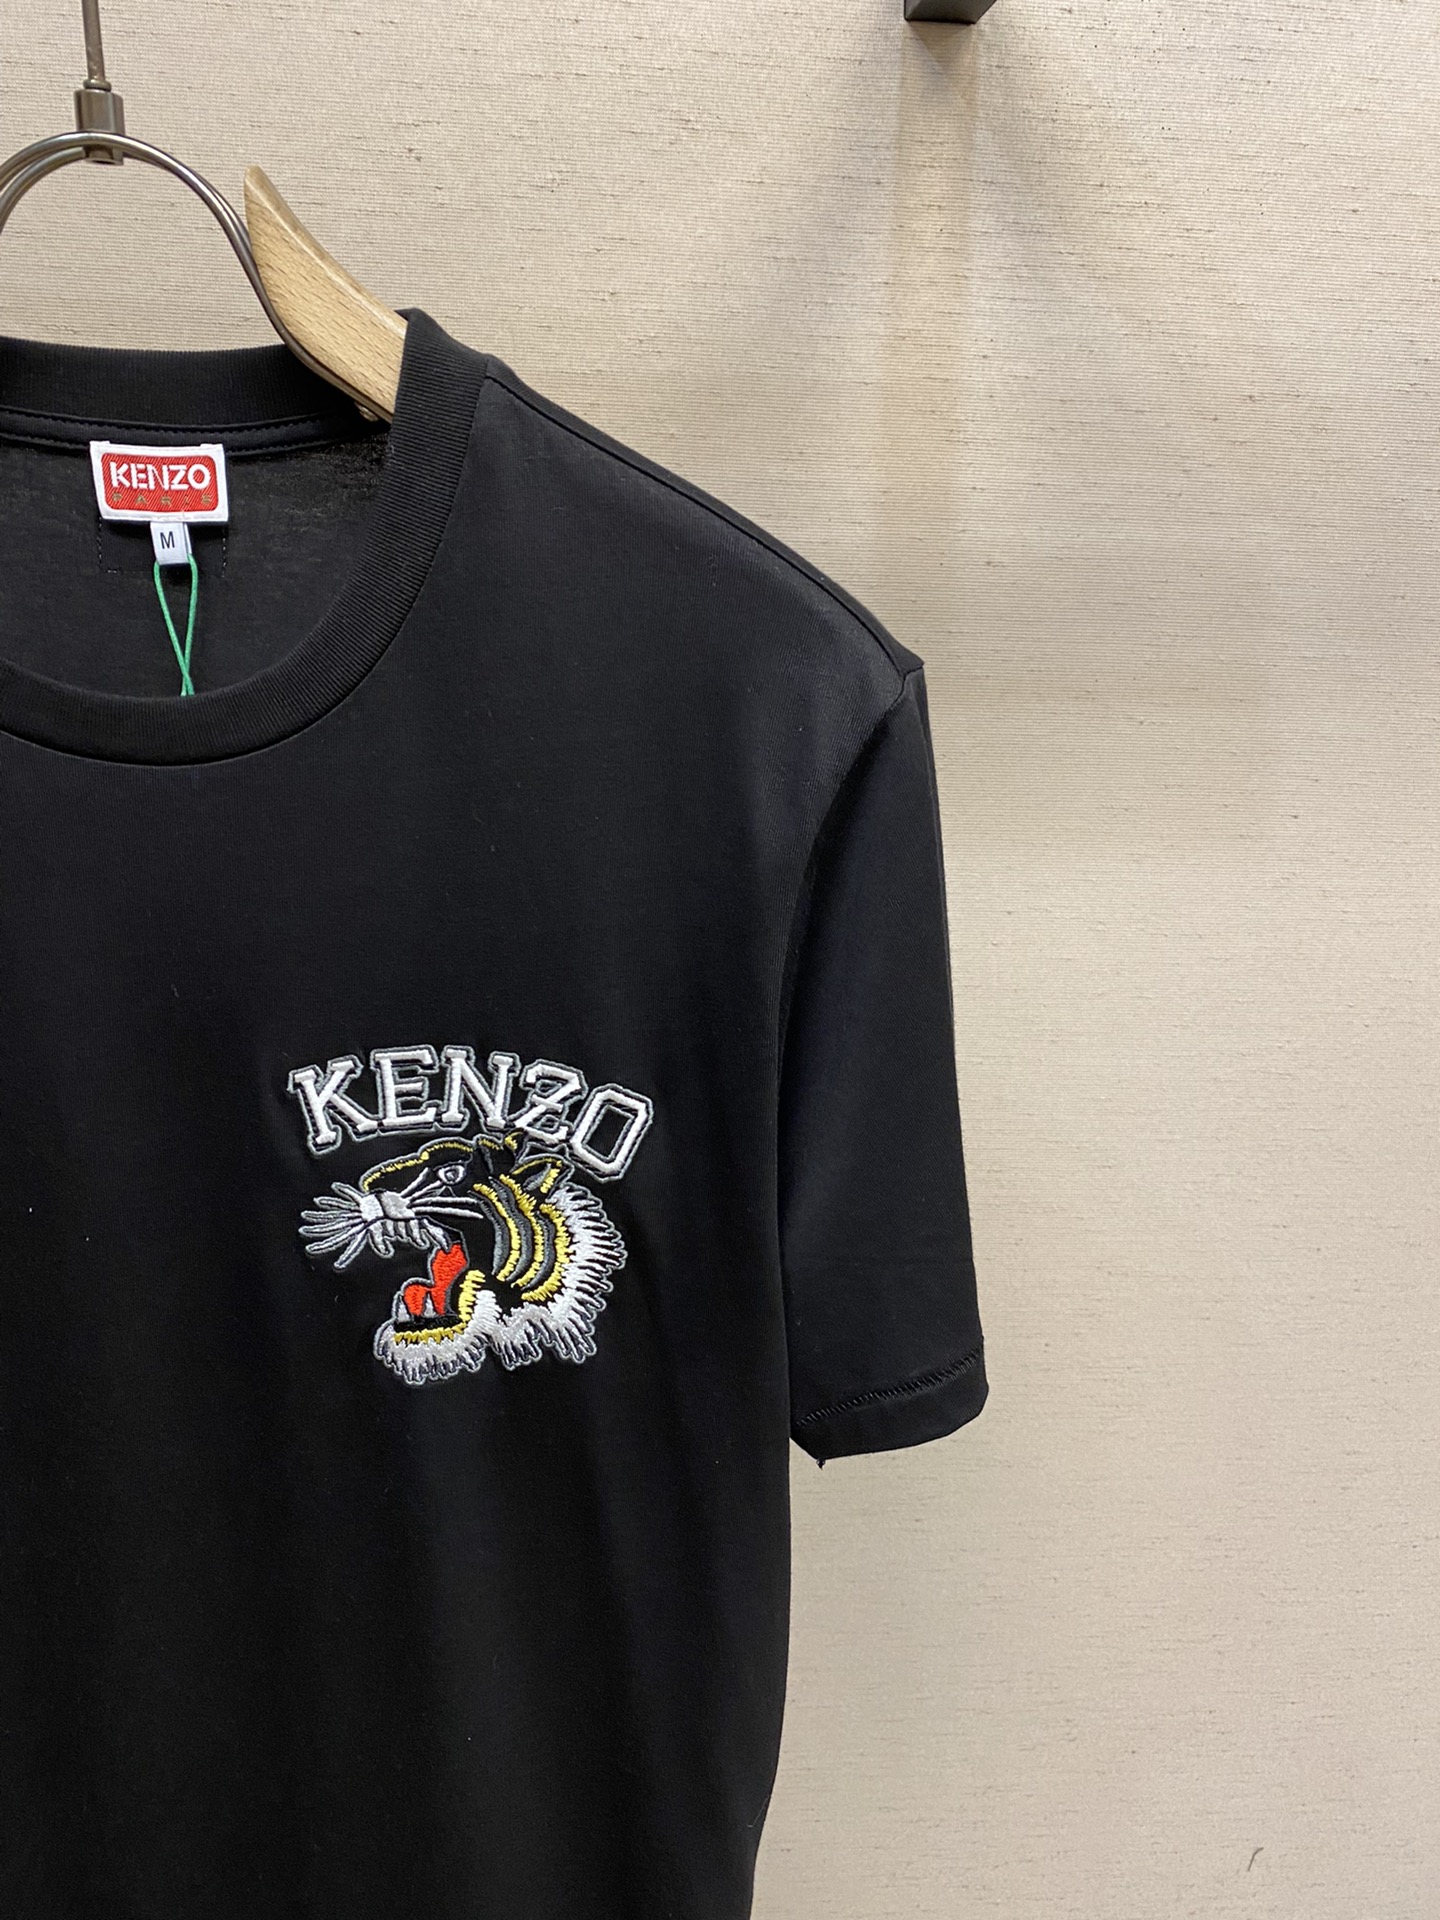 KENZO高田贤三春夏新品休闲时尚老虎刺绣短袖T恤男女款作为今年的最新款式质感工艺更是不用担心面料选用客